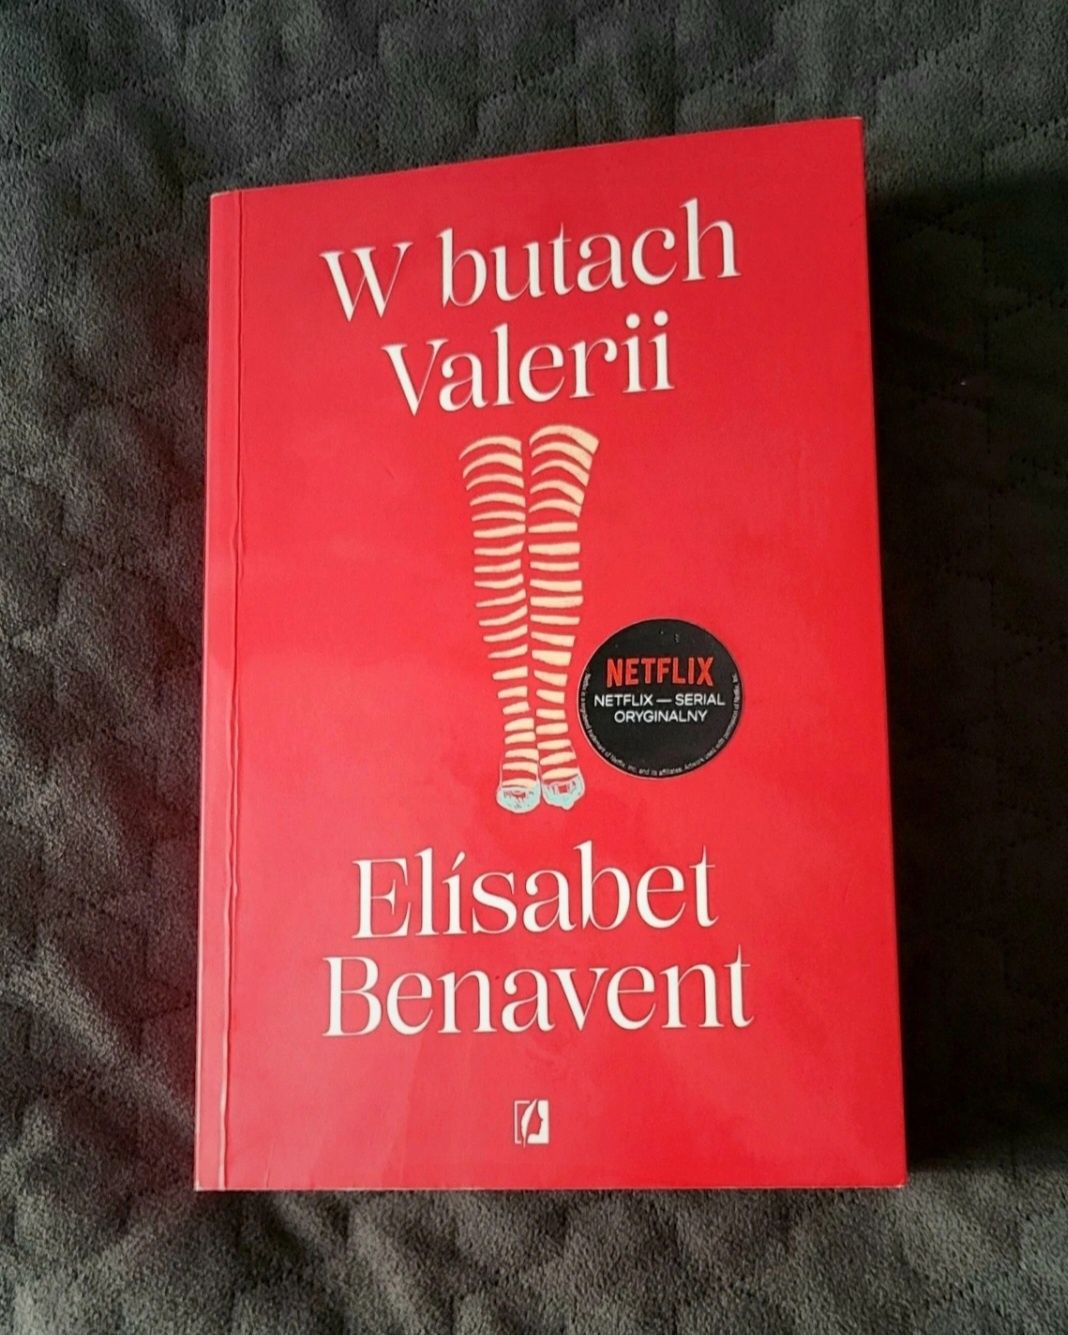 "W butach Valerii" Elisabet Benavent